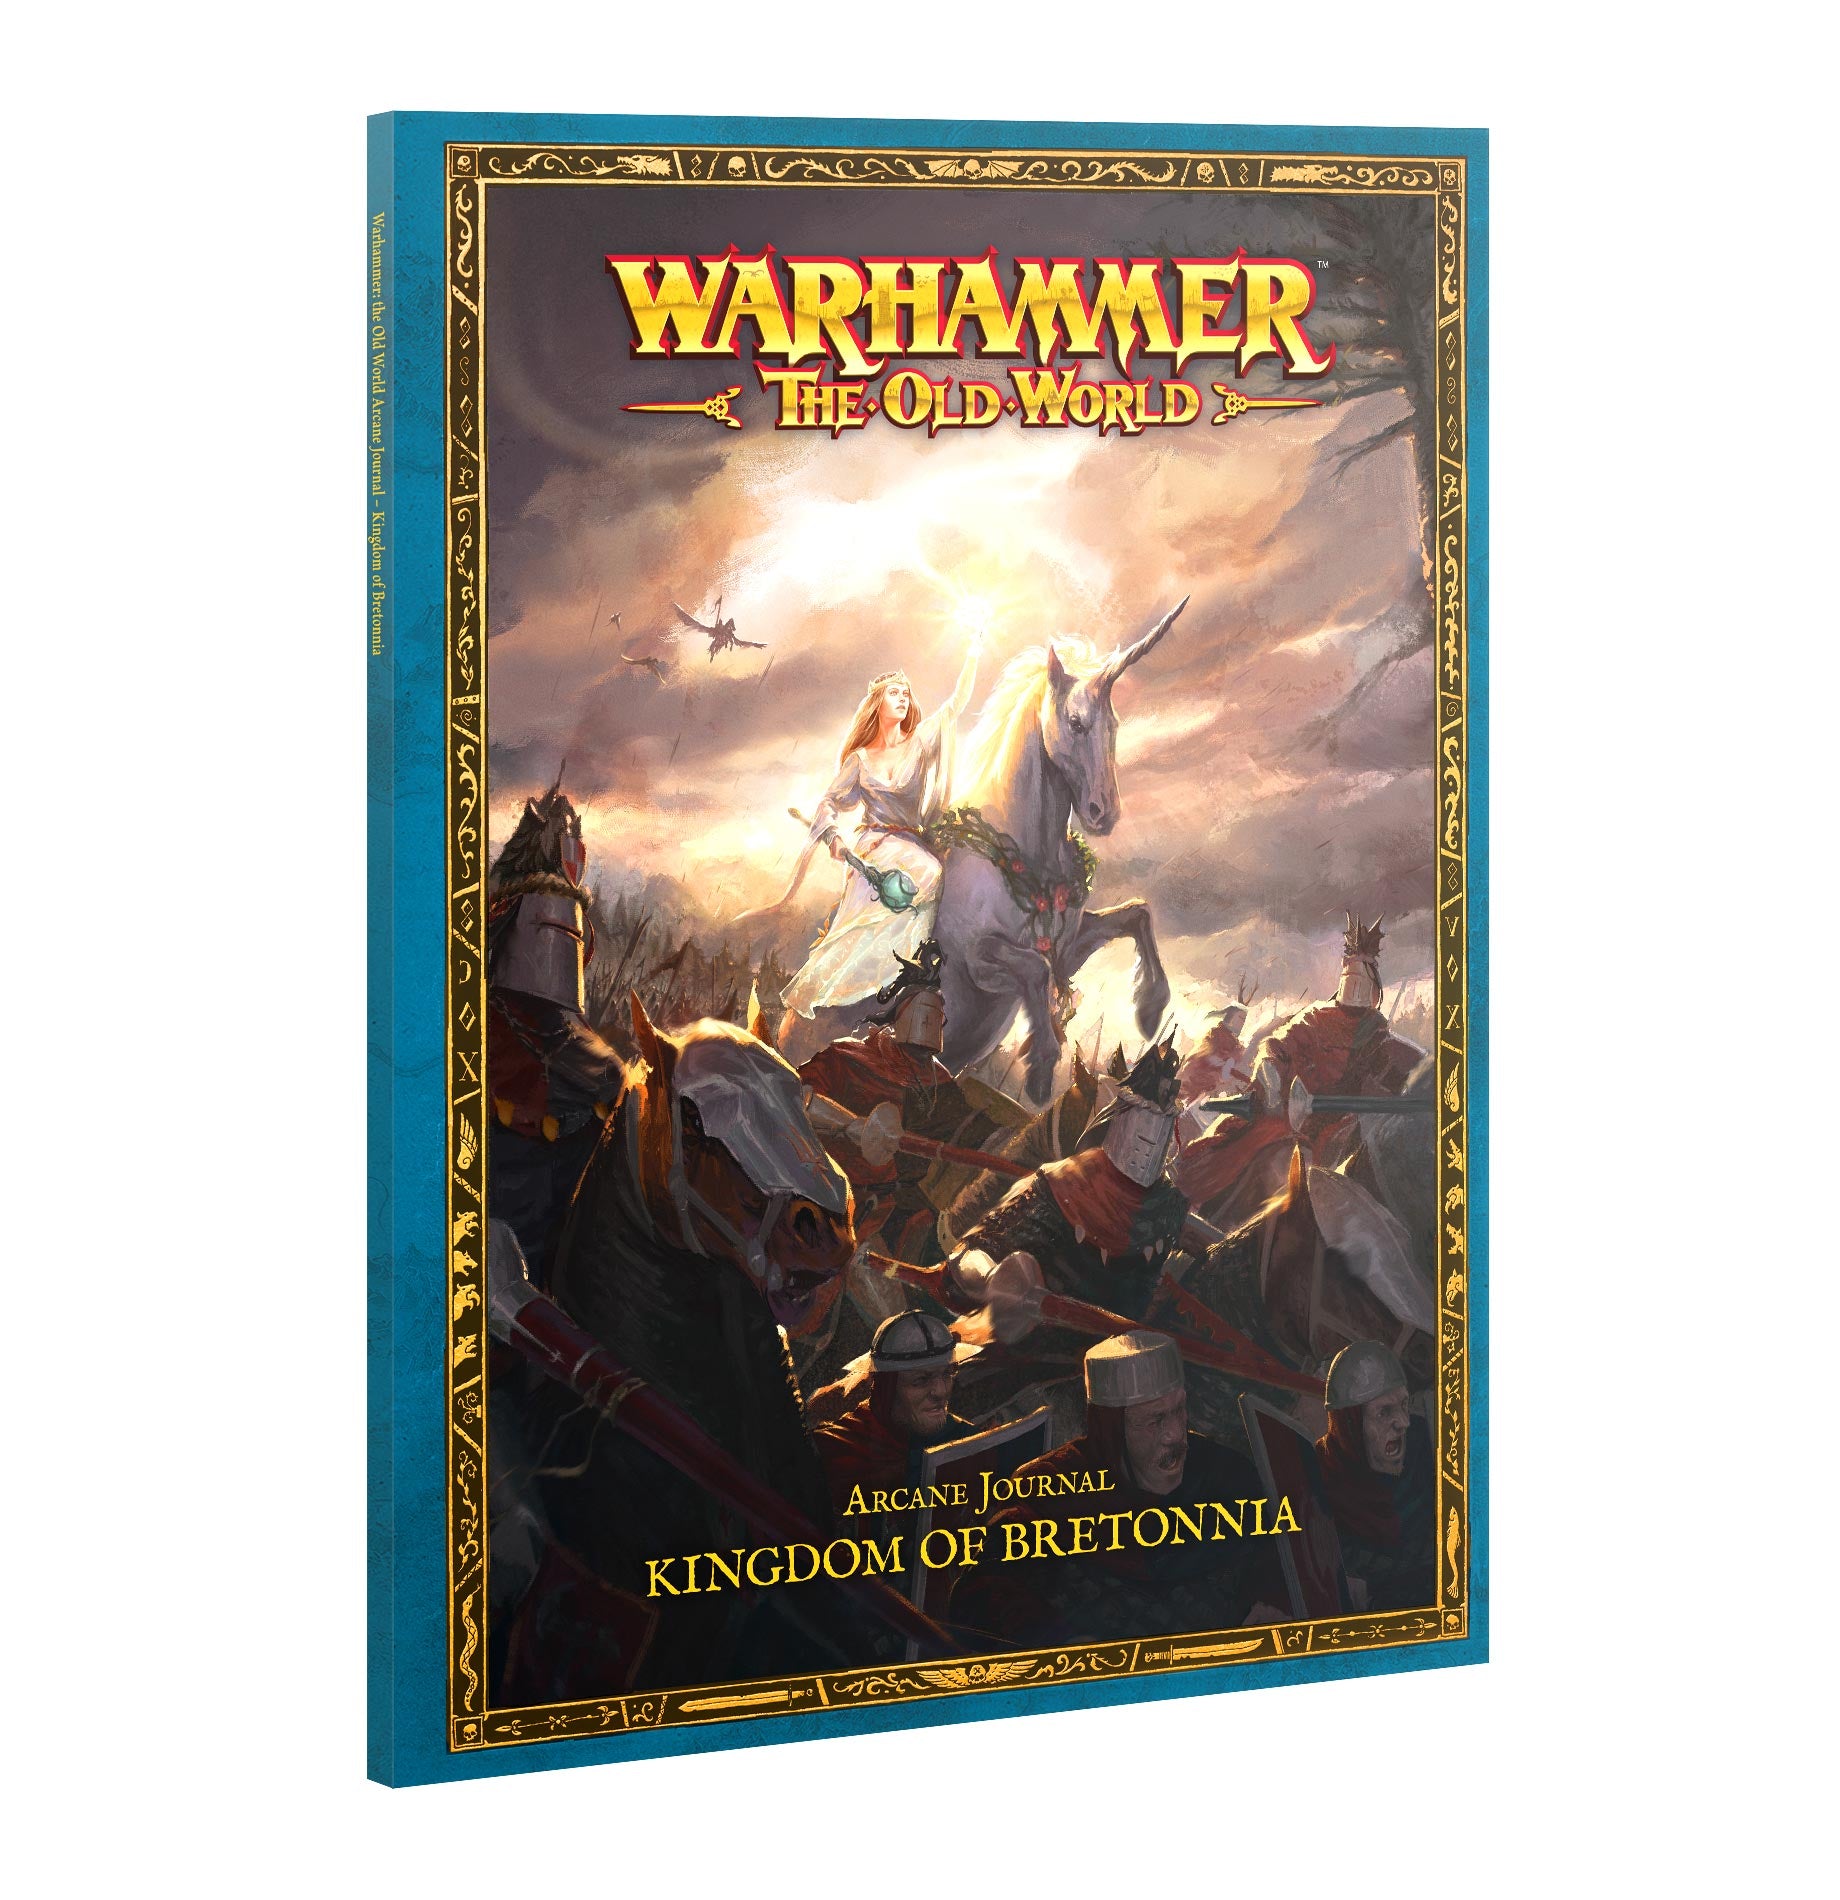 Warhammer: the Old World Arcane Journal : Kingdom of Bretonnia MKSTQIJLYW |0|